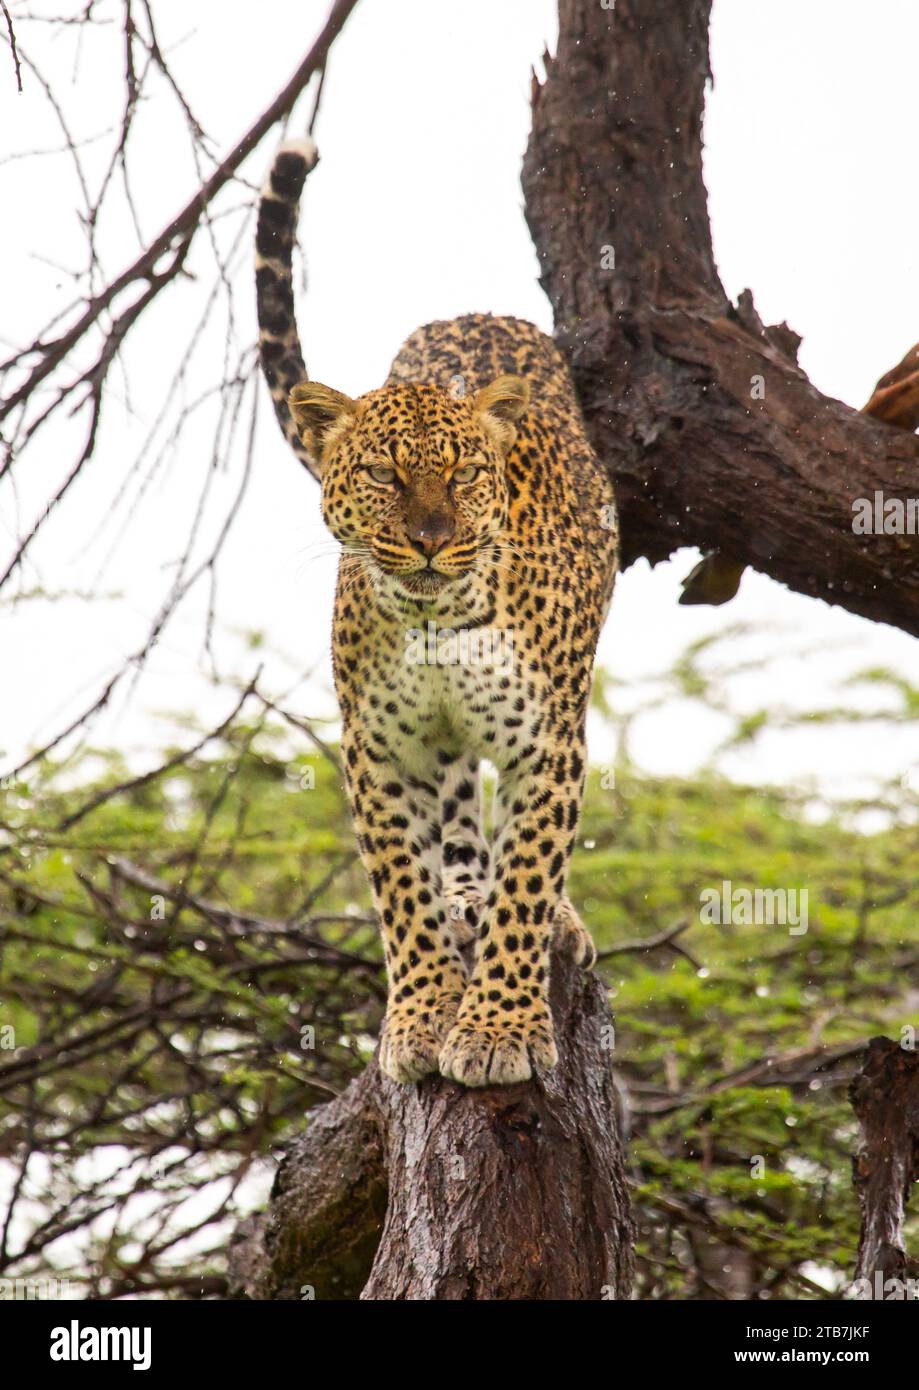 Leopardo de pie en un árbol, Condado de Samburu, Reserva Nacional de Samburu, Kenia Foto de stock